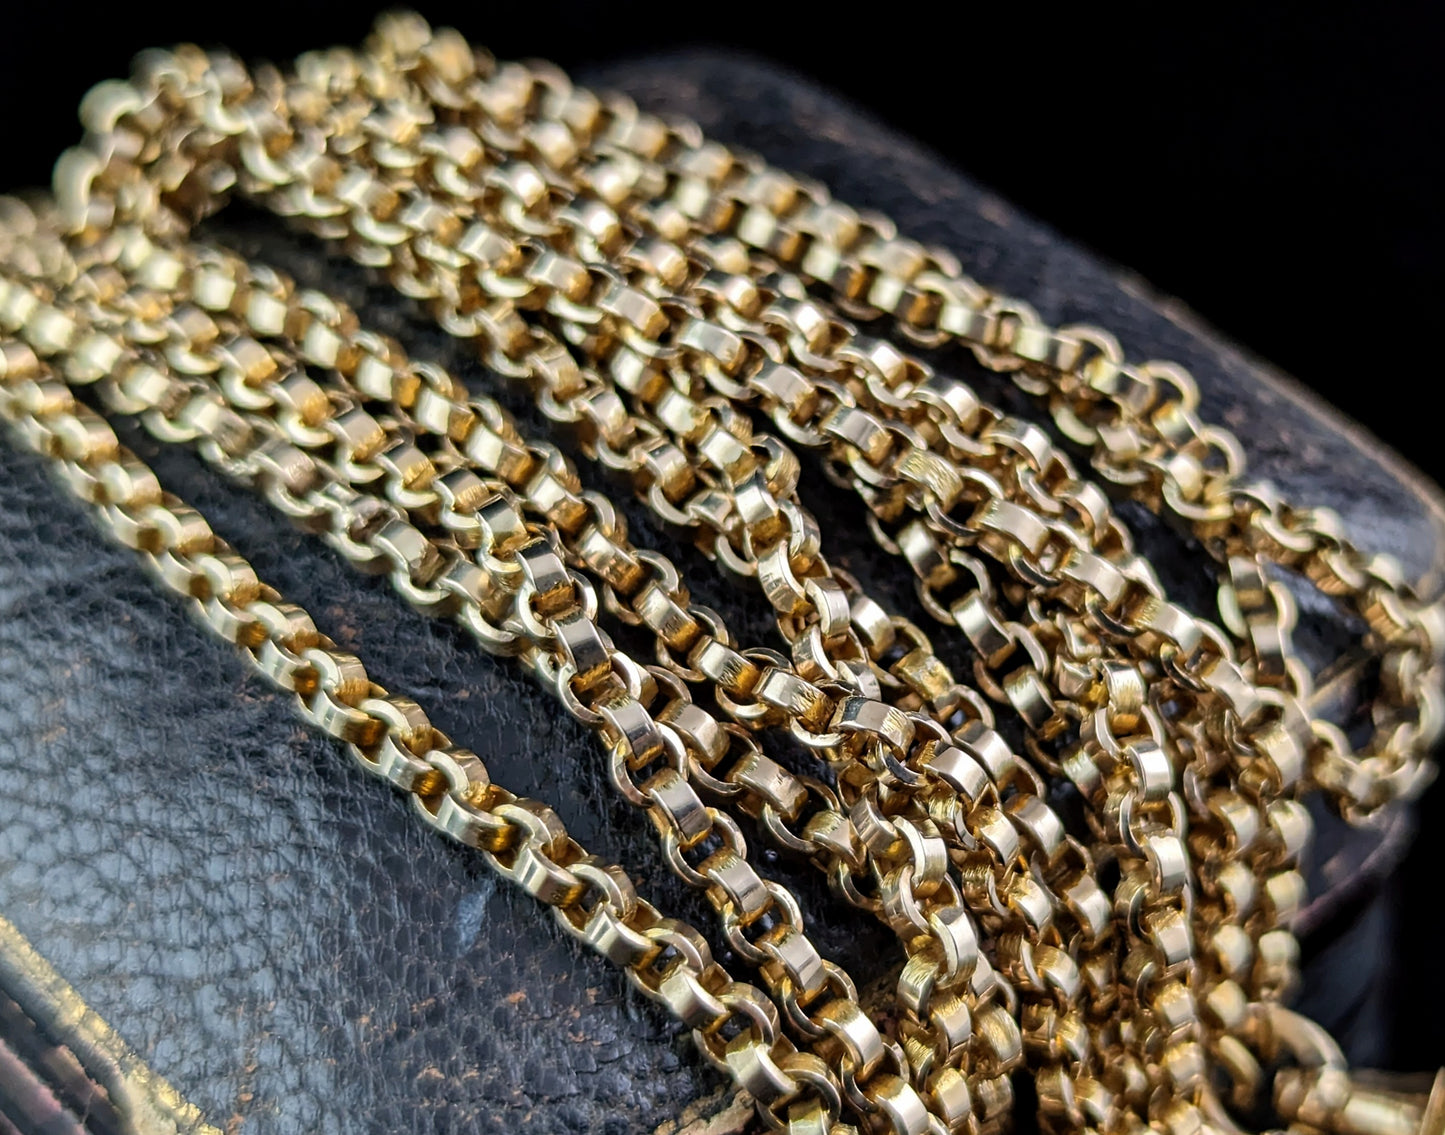 Antique 9ct gold longuard chain necklace, Victorian